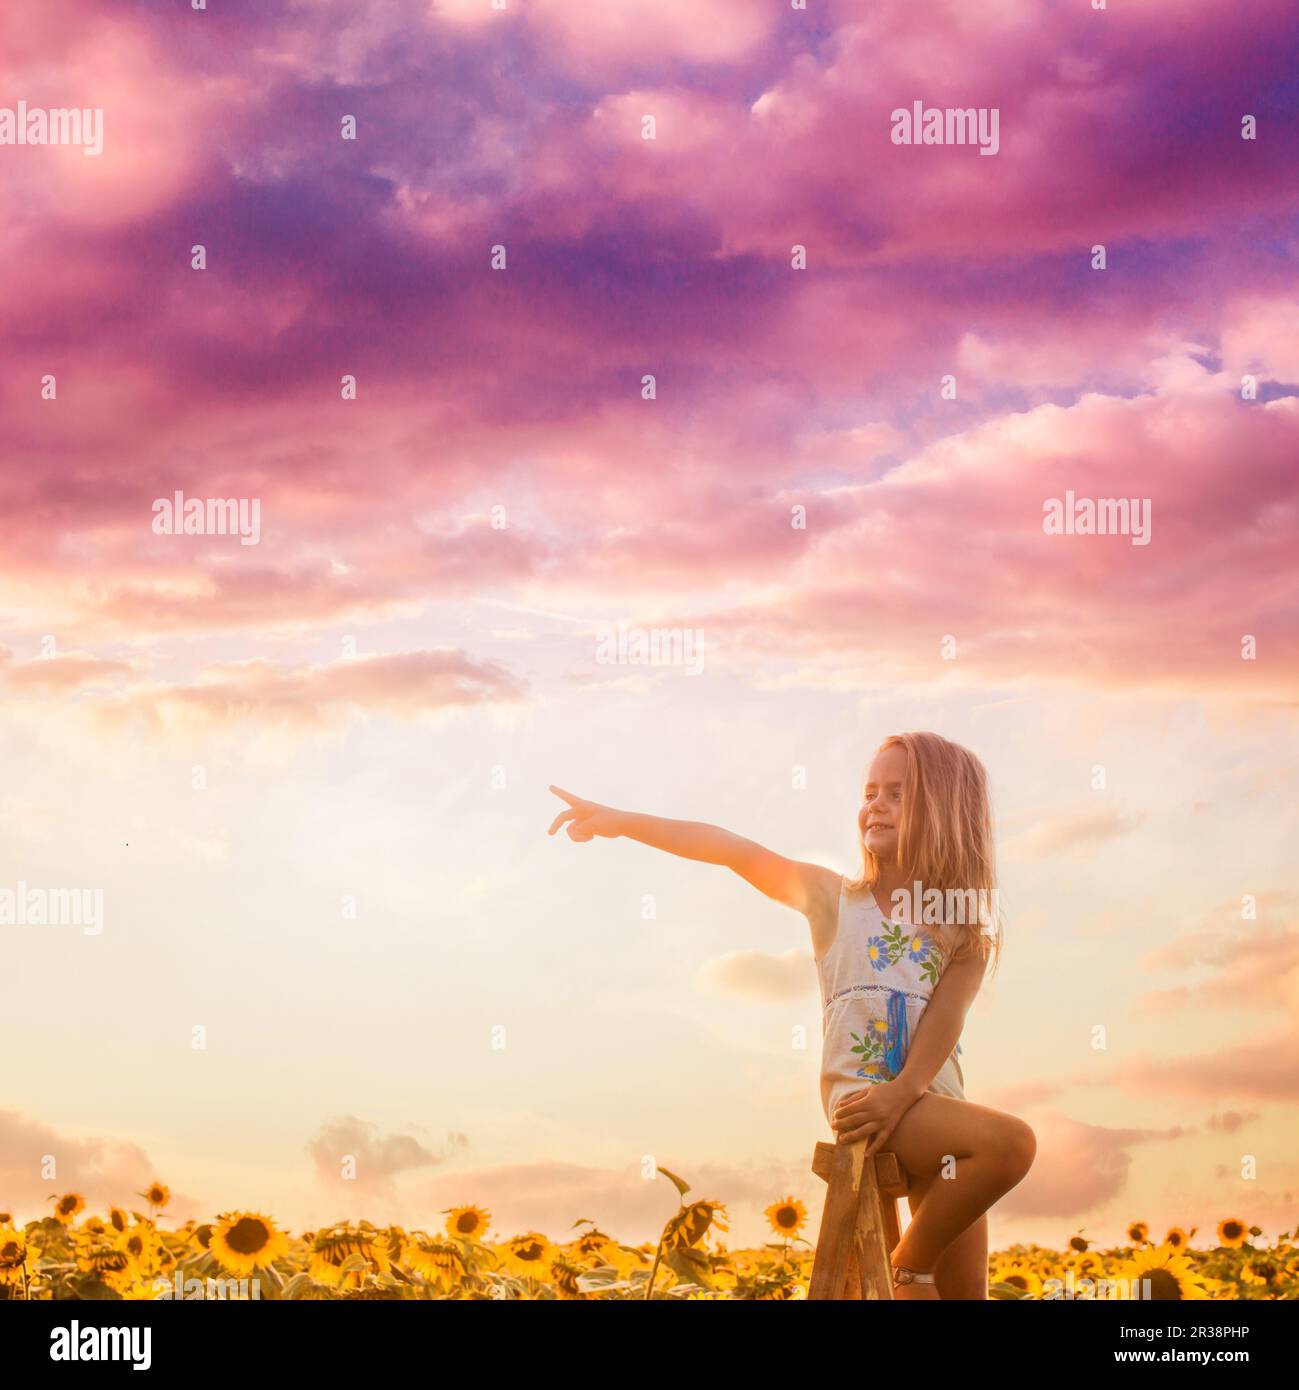 The girl looks around the sunflower field Stock Photo